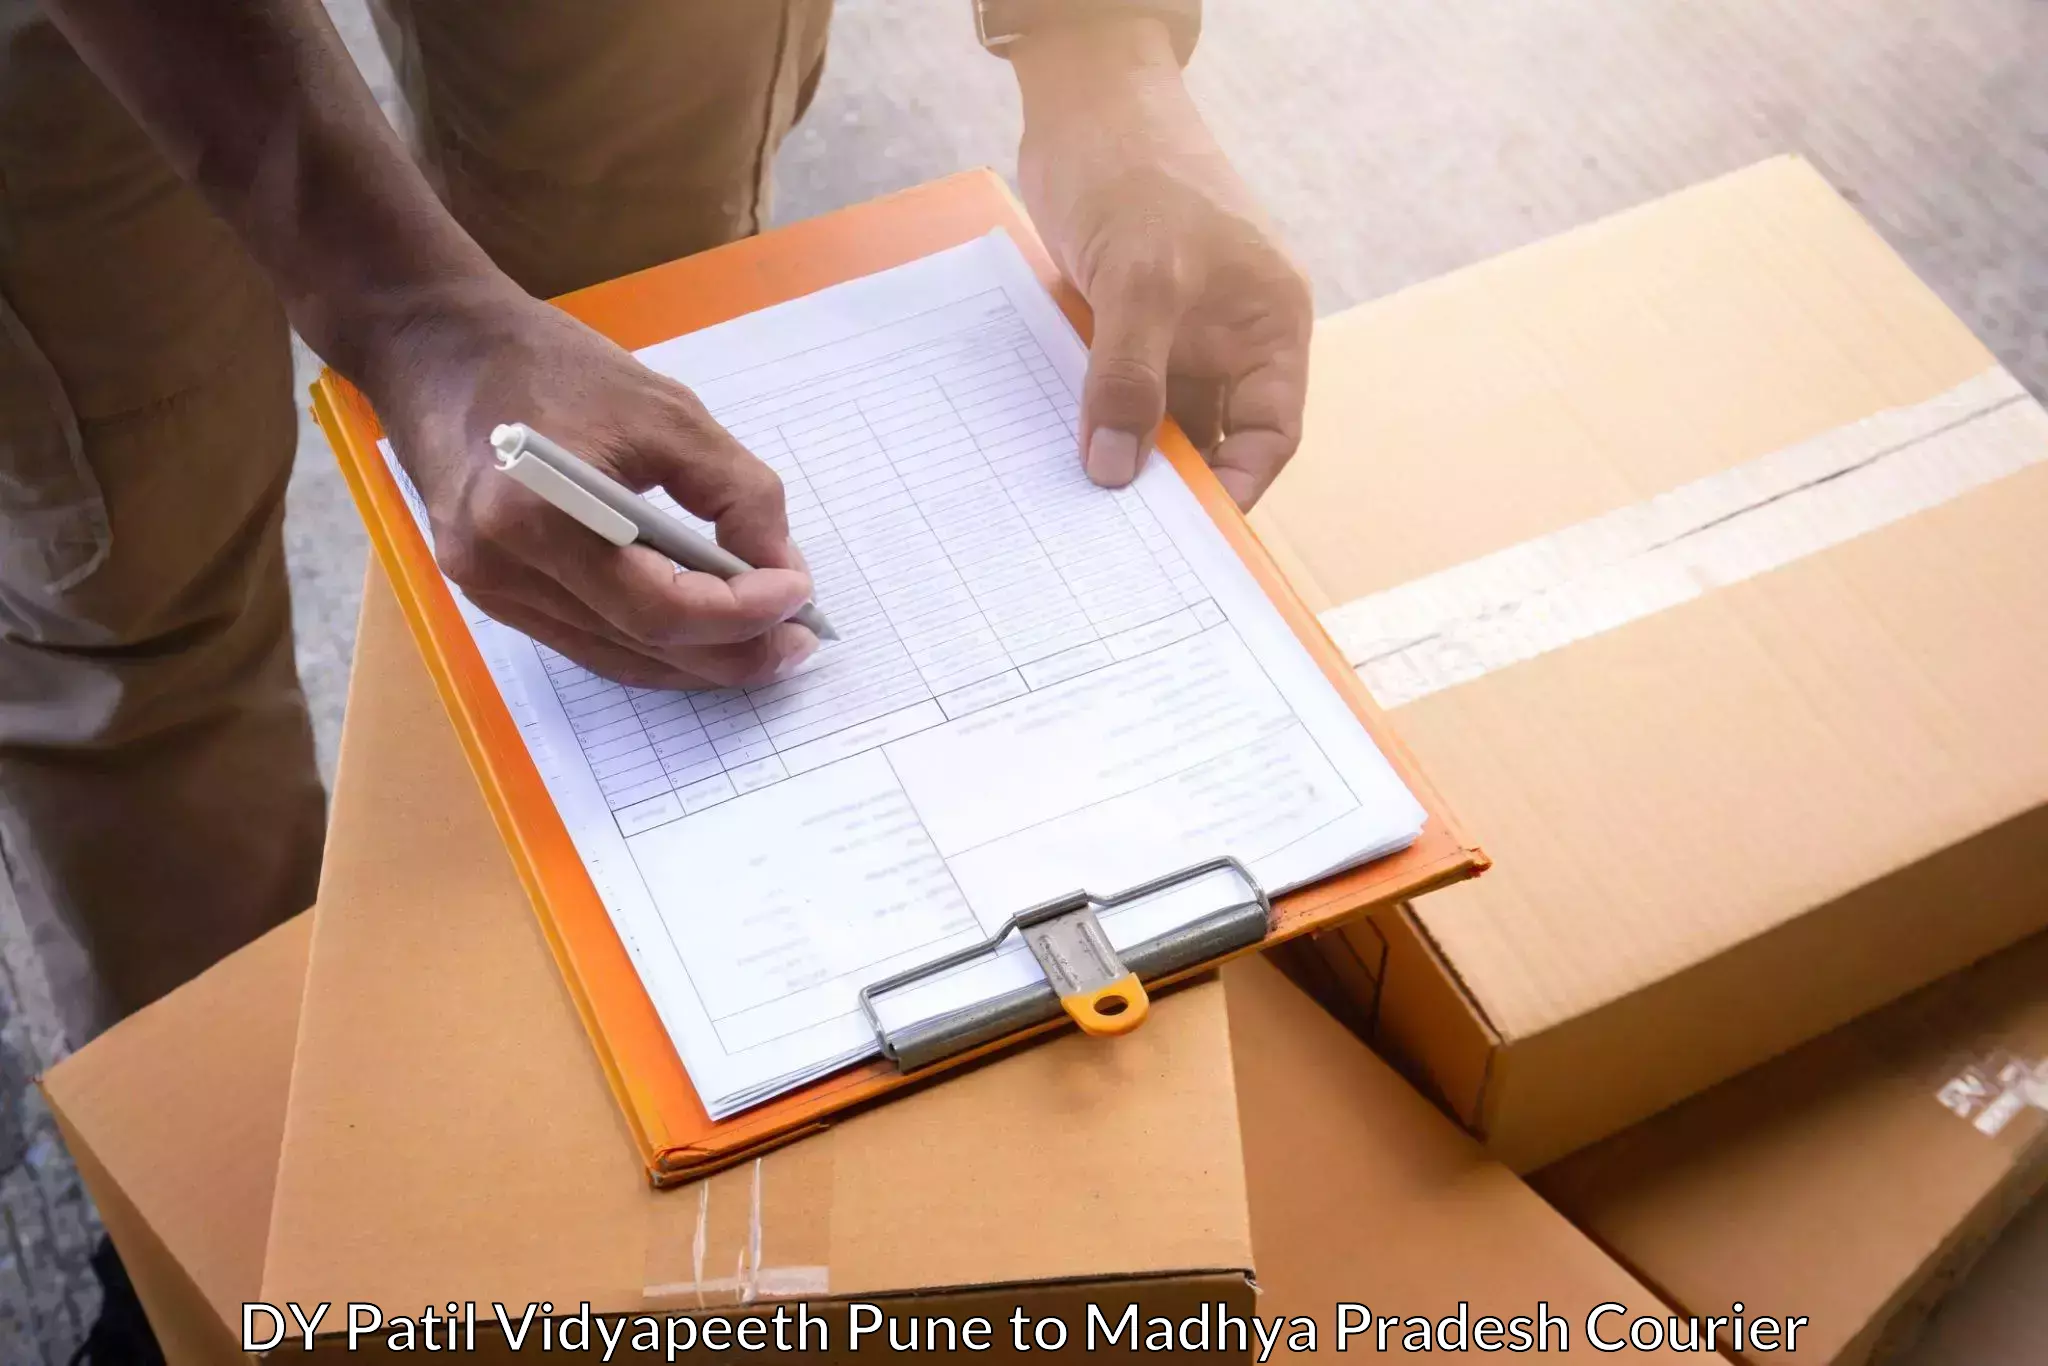 Cargo delivery service DY Patil Vidyapeeth Pune to Madhya Pradesh